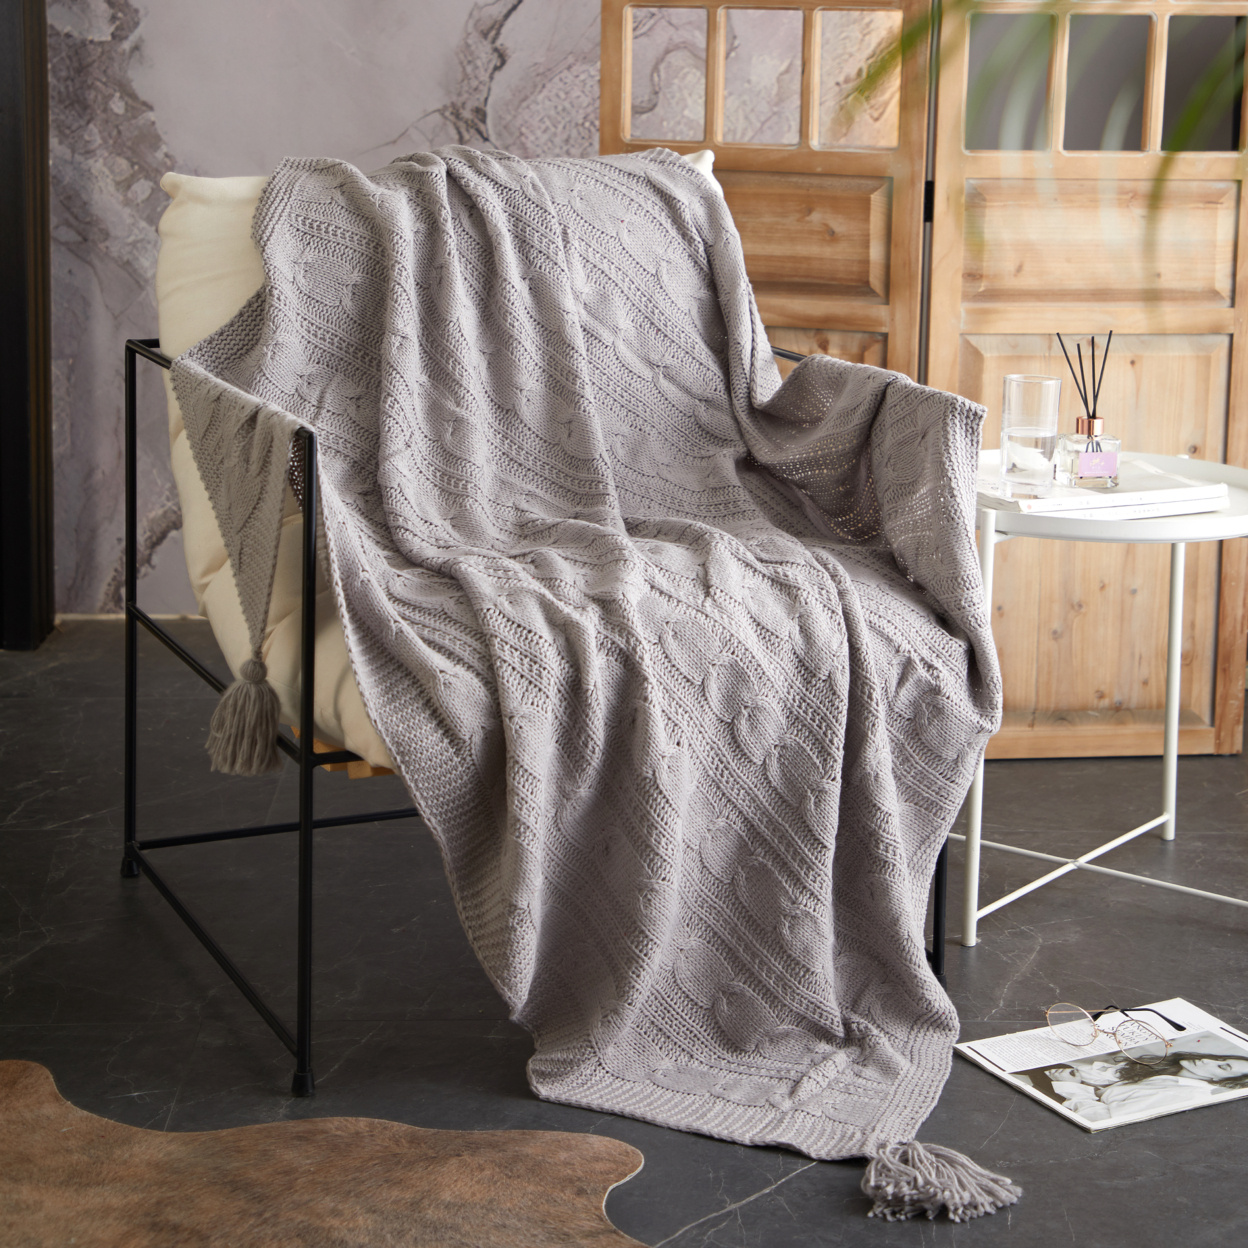 NY&C Home Dorja Knitted Throw Blanket Plush Super Soft Textured Pattern - Mustard